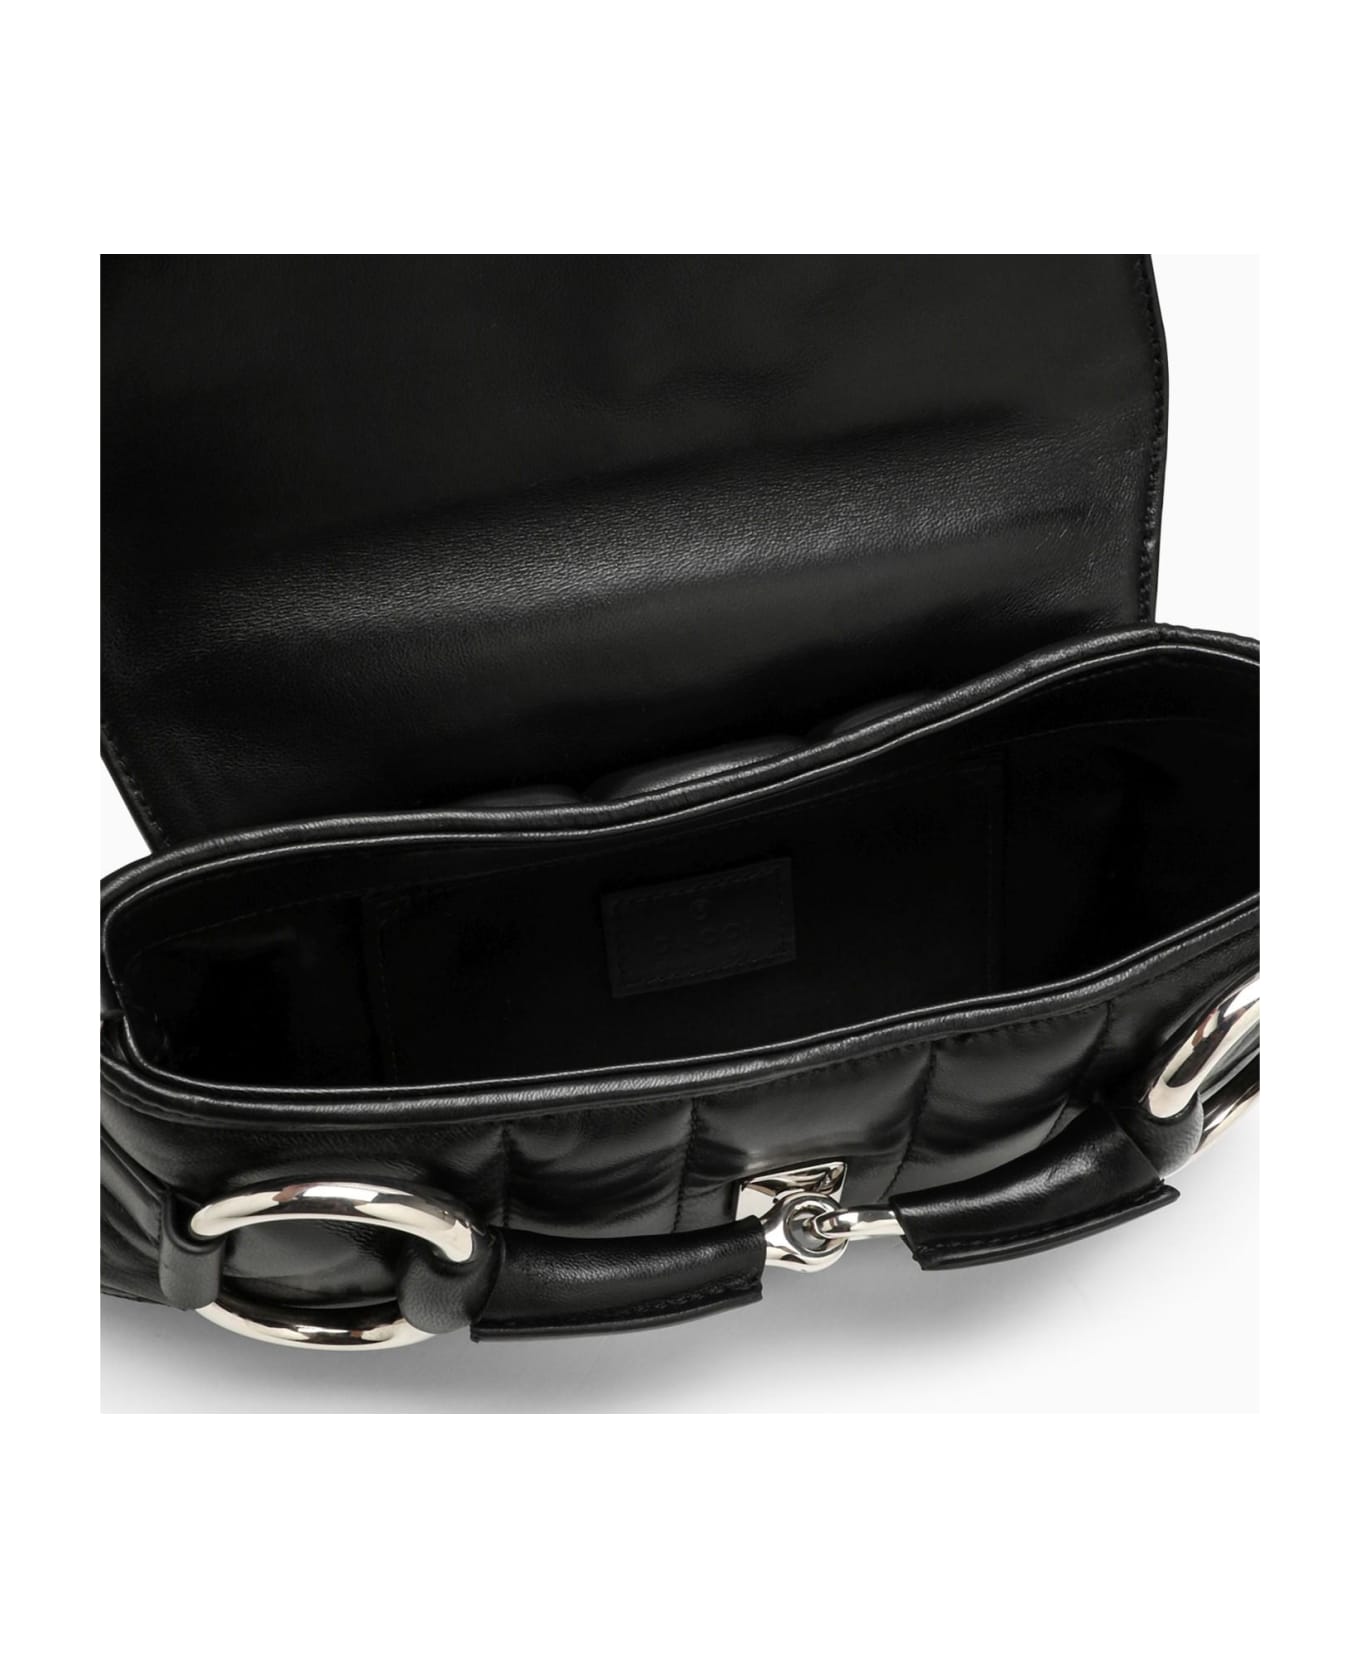 Gucci Horsebit Chain Small Black Bag - Black